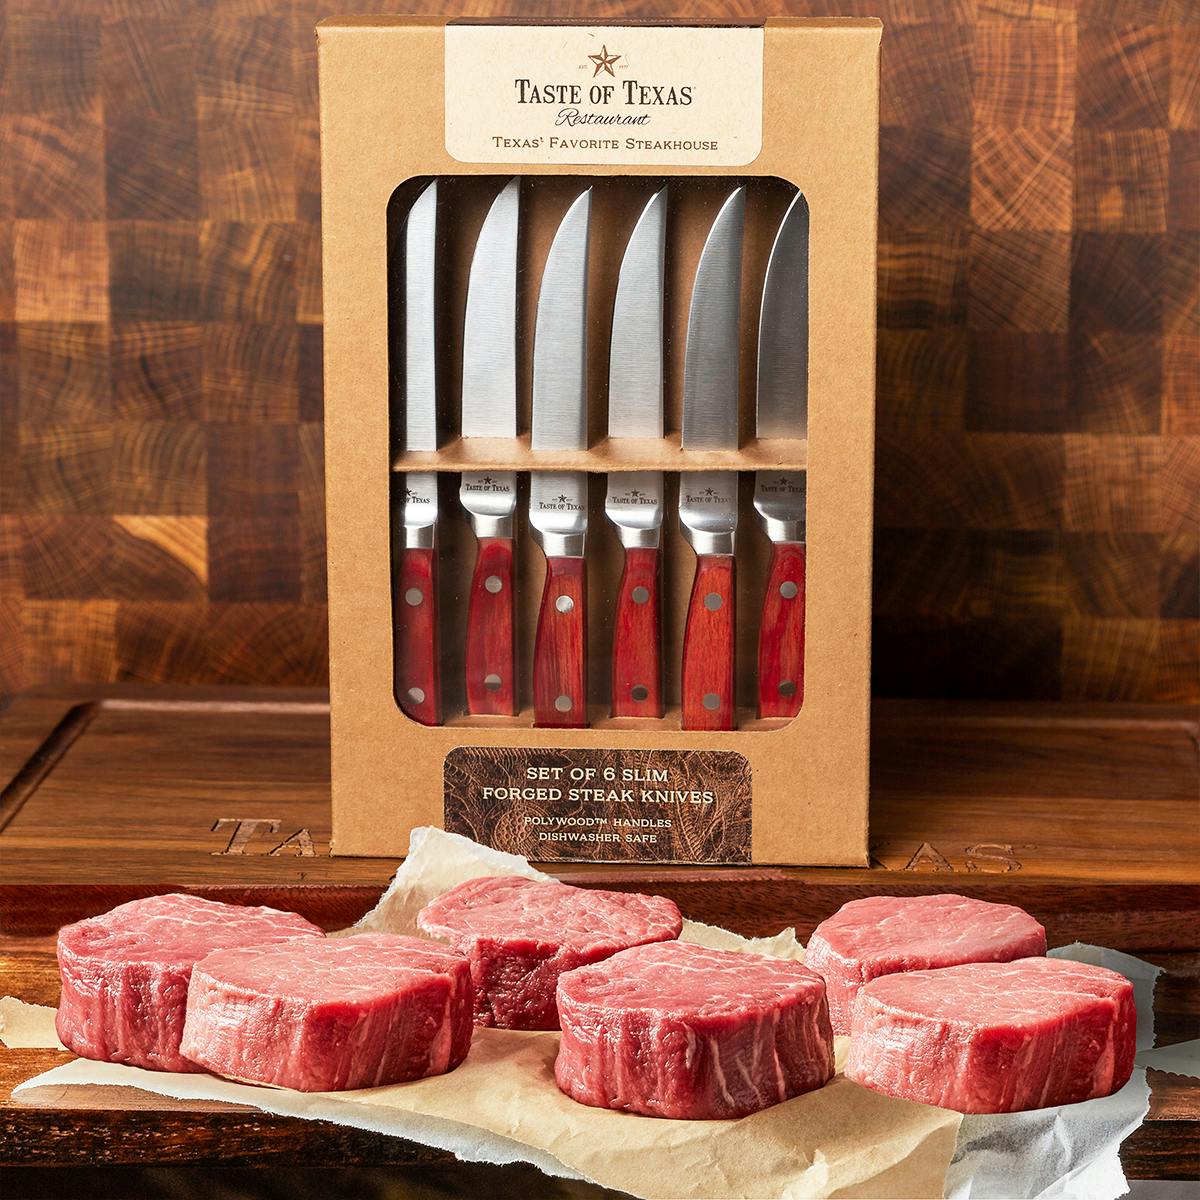 https://goldbelly.imgix.net/uploads/showcase_media_asset/image/206274/Taste-of-Texas-Steak-and-Knives.jpg?ixlib=rails-3.0.2